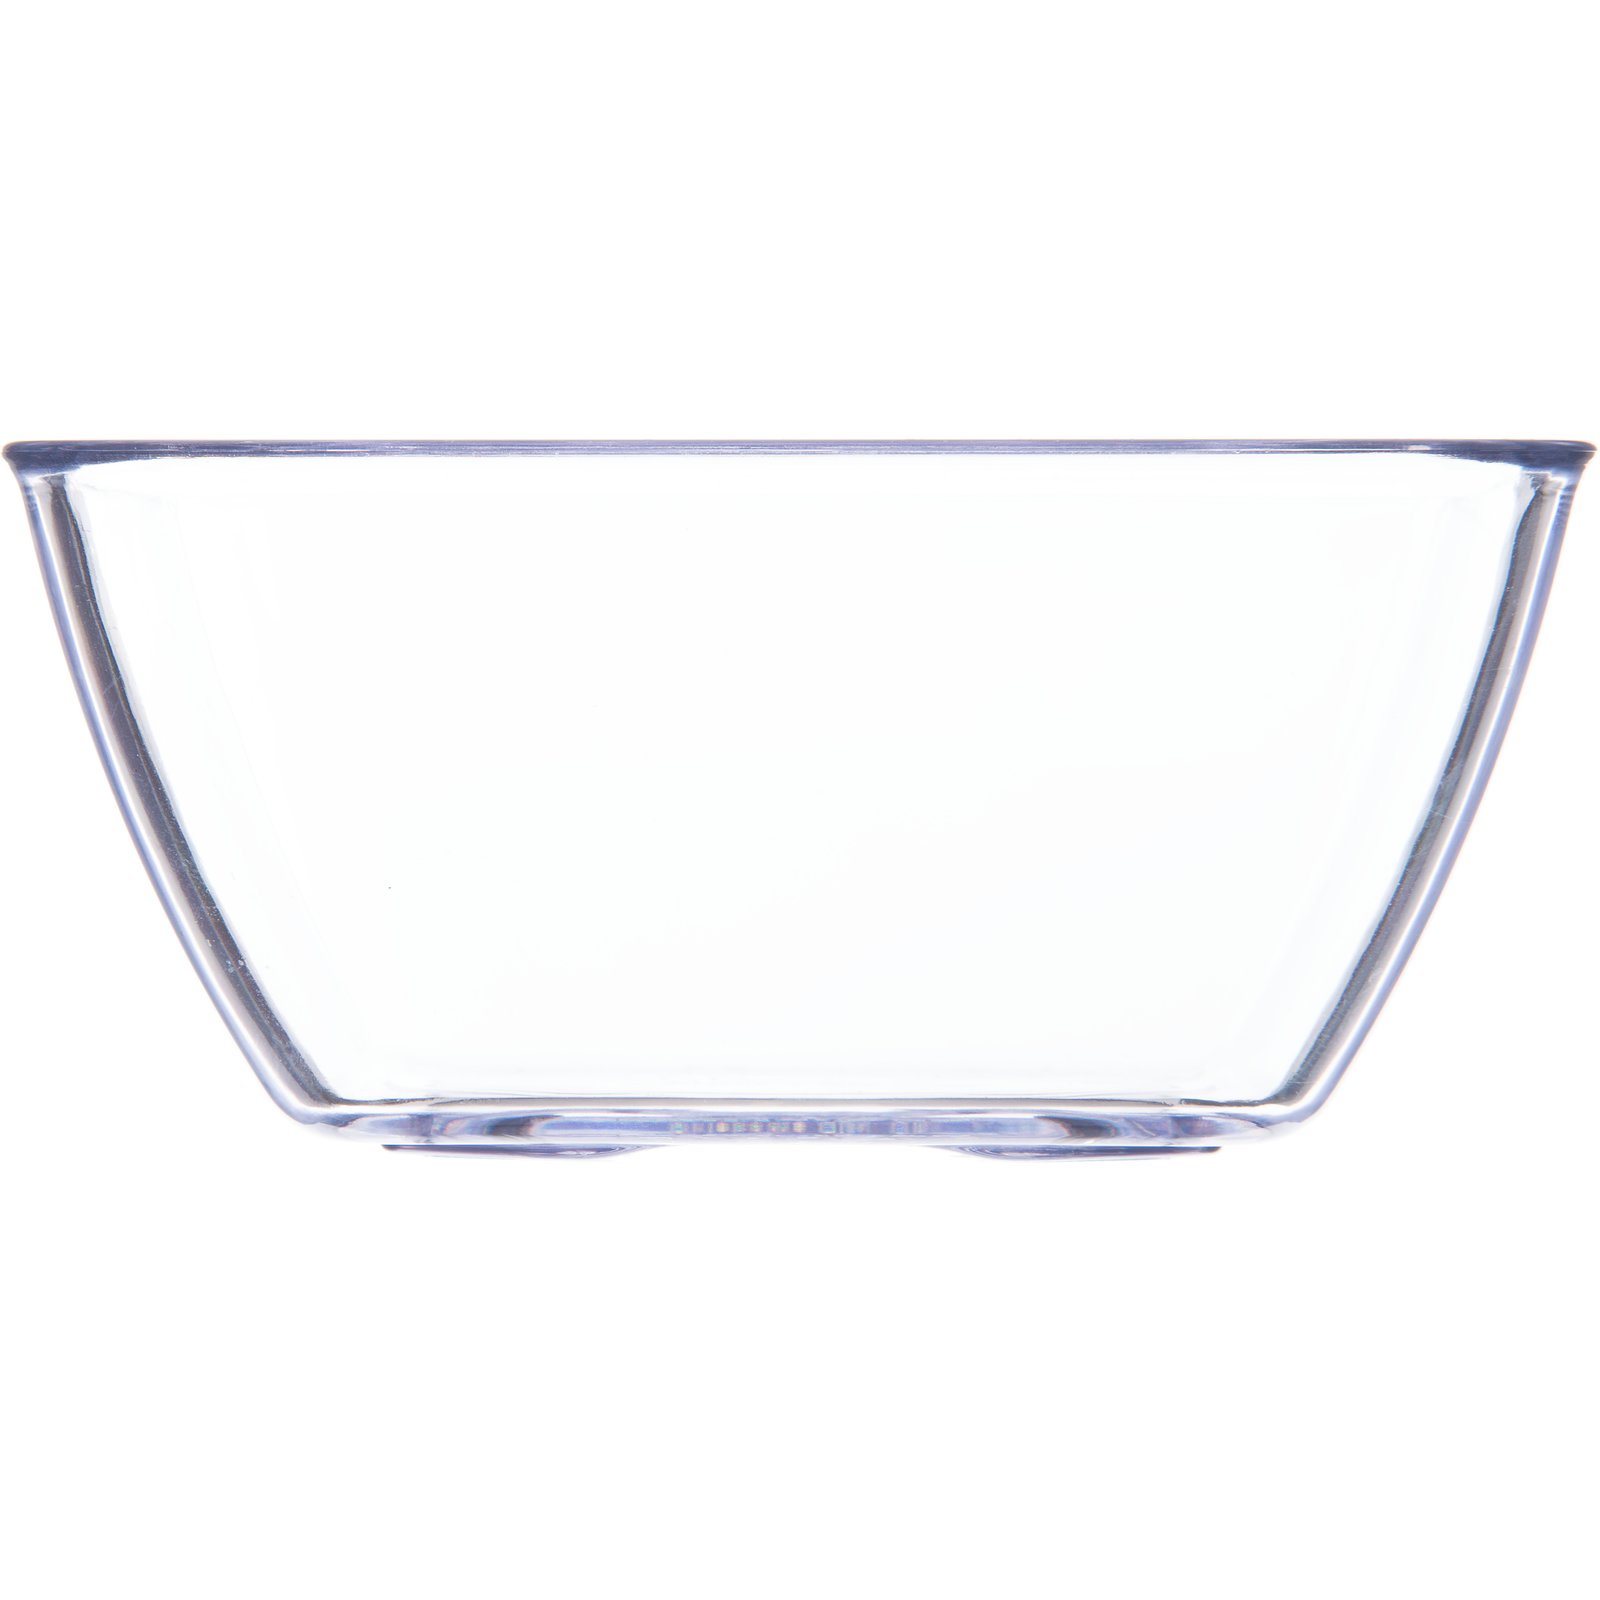 Solo Cup FS9DPY Basix® White Foam Plates, 9 Inch